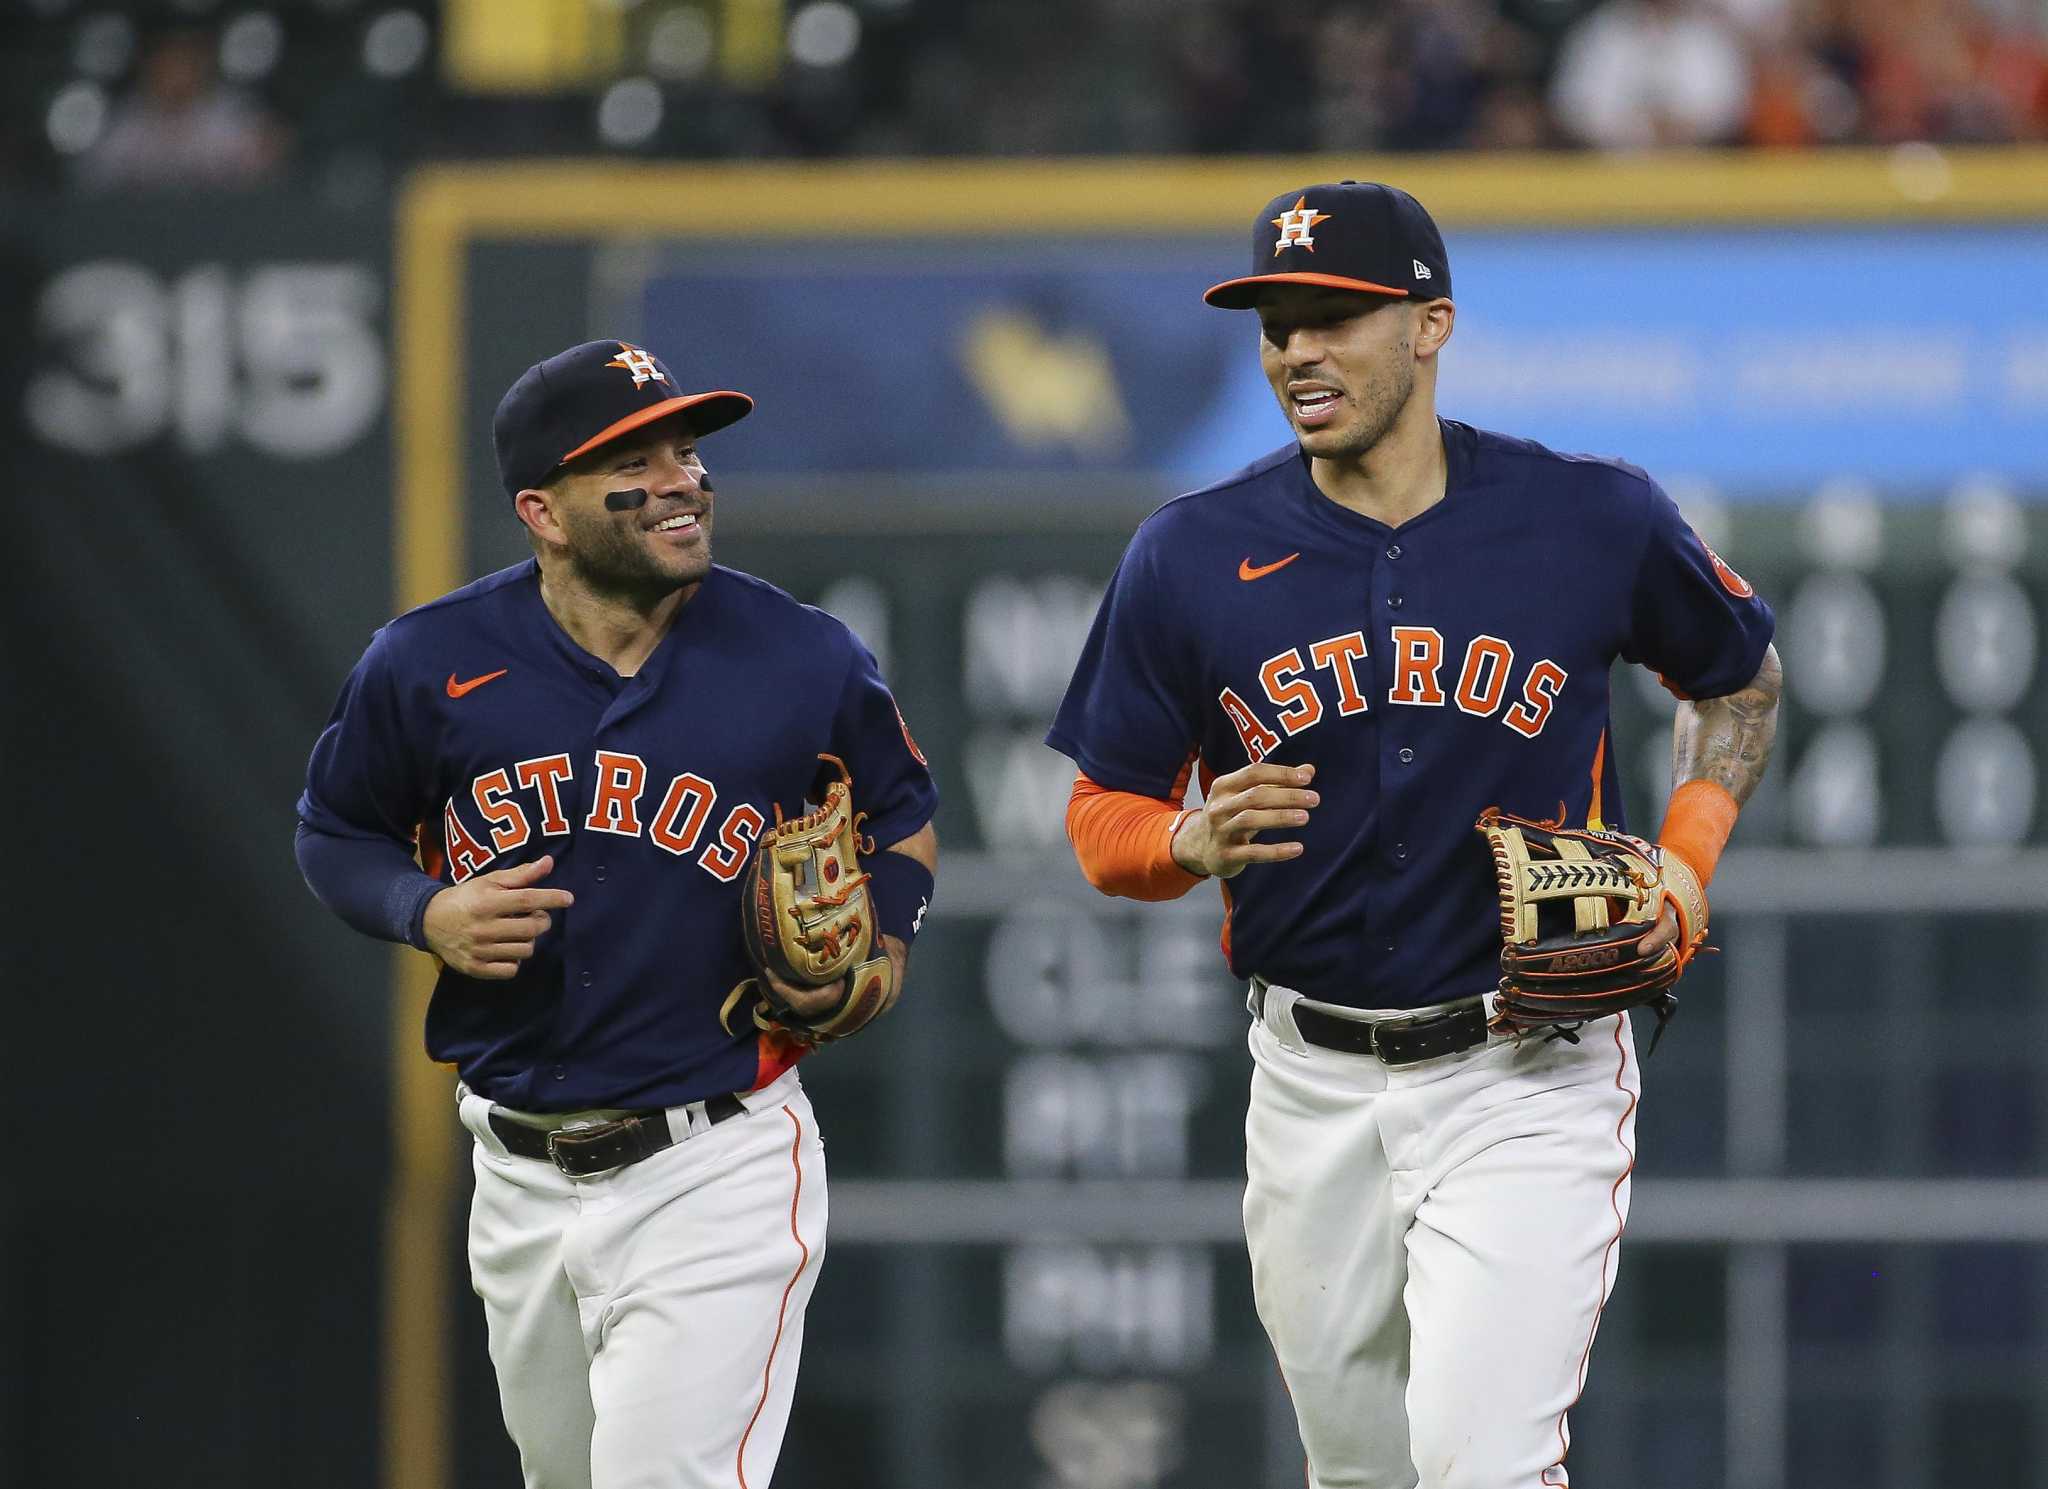 Carlos Correa shines in MLB postseason, but Astros future remains